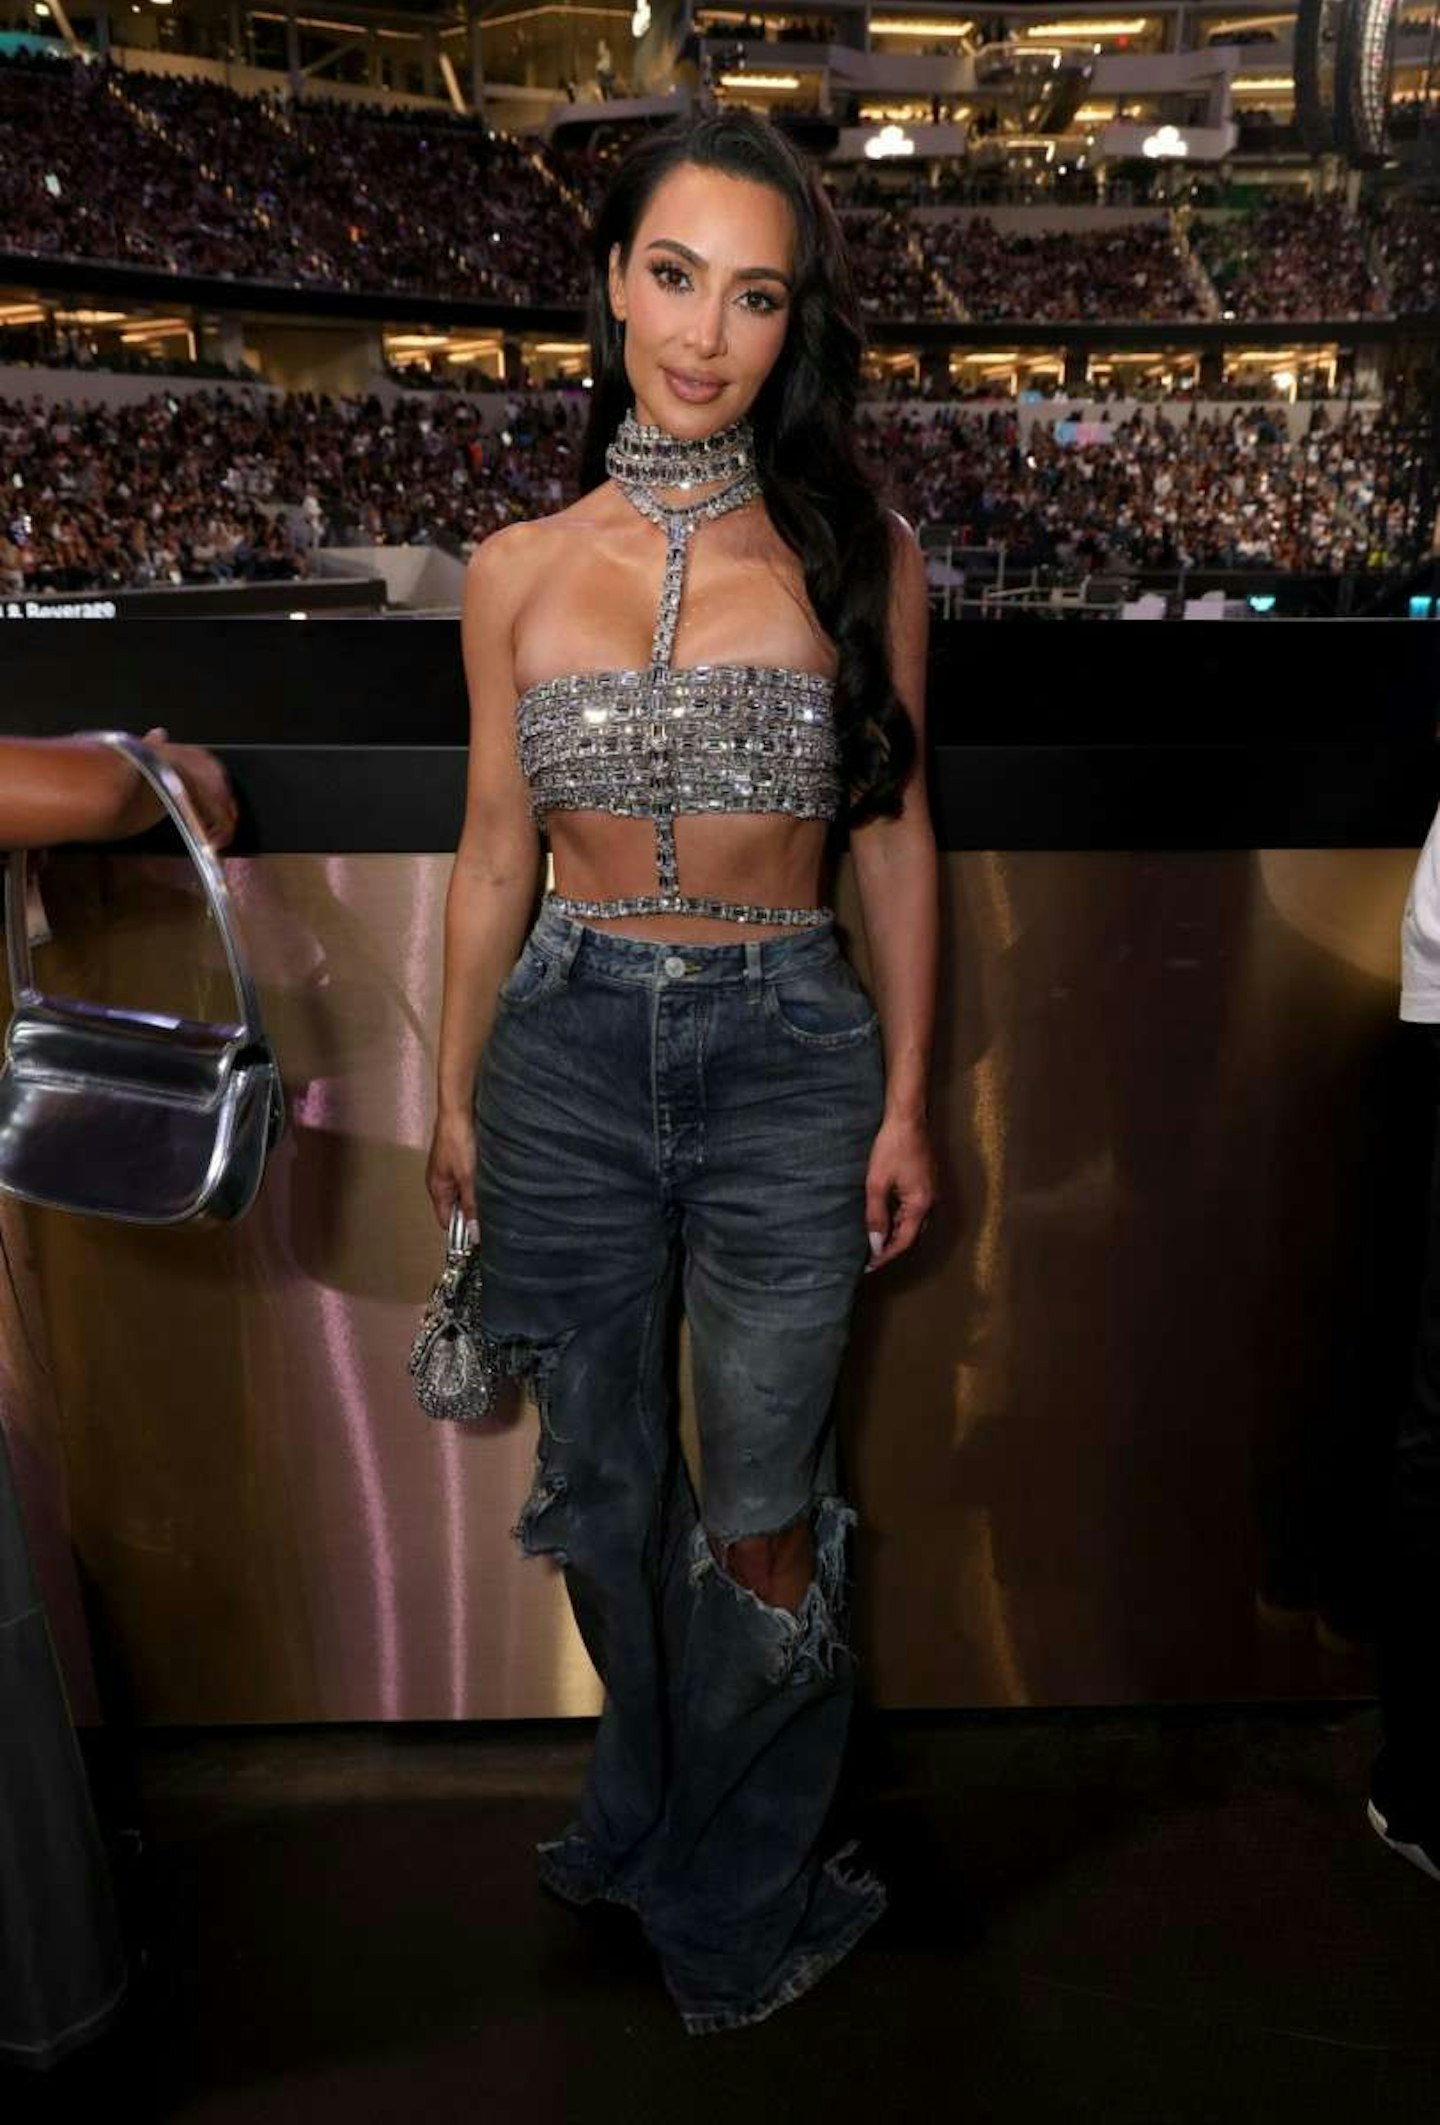 Kim Kardashian's underwear brand Skims is joining forces with Fendi